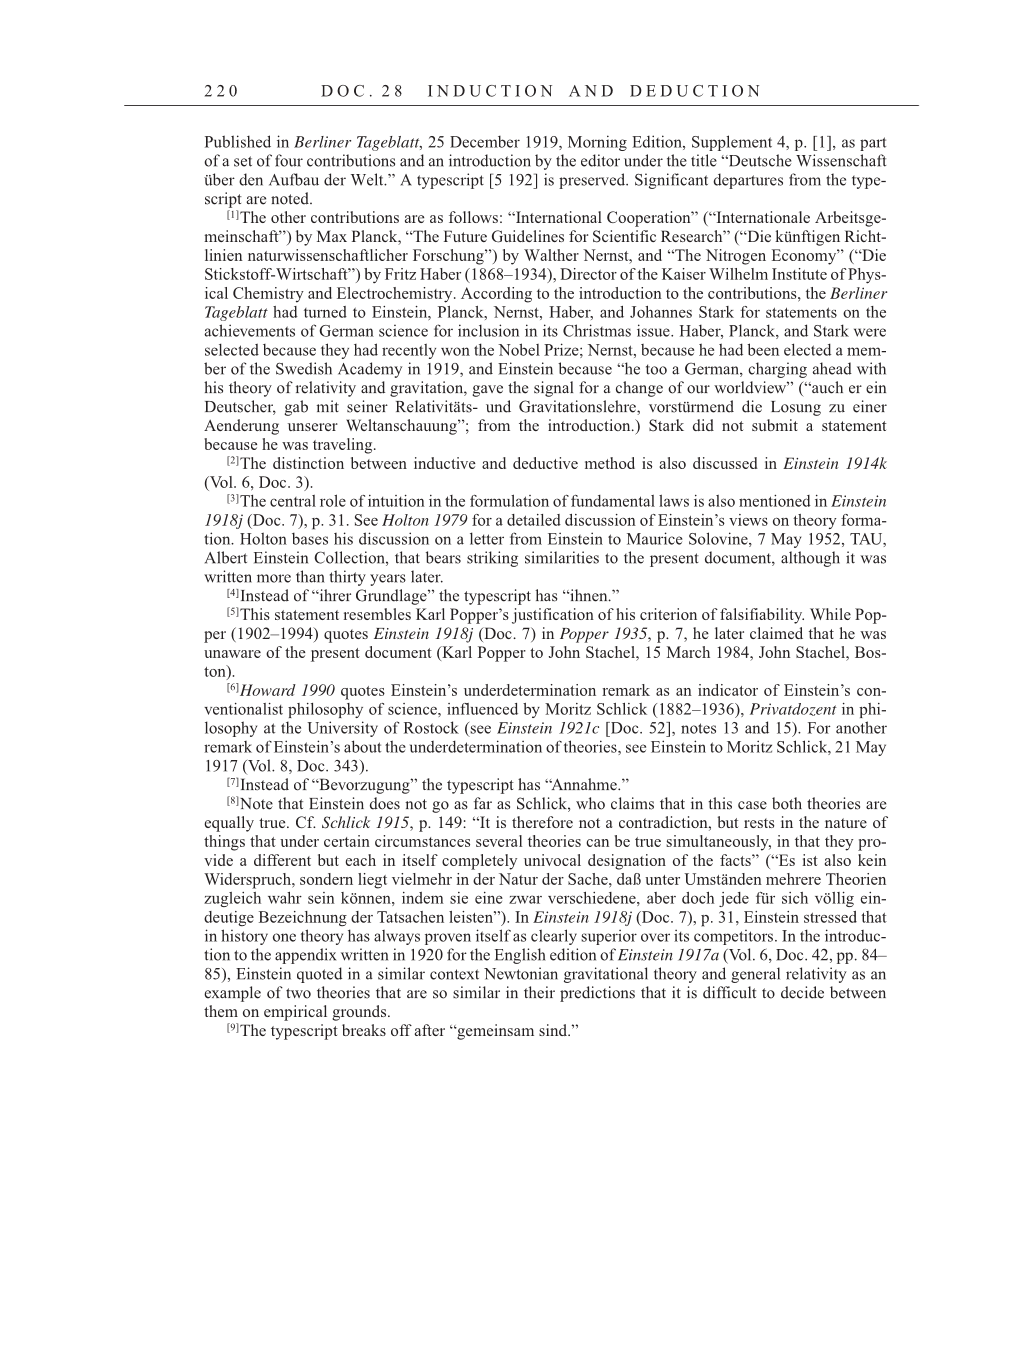 Volume 7: The Berlin Years: Writings, 1918-1921 page 220